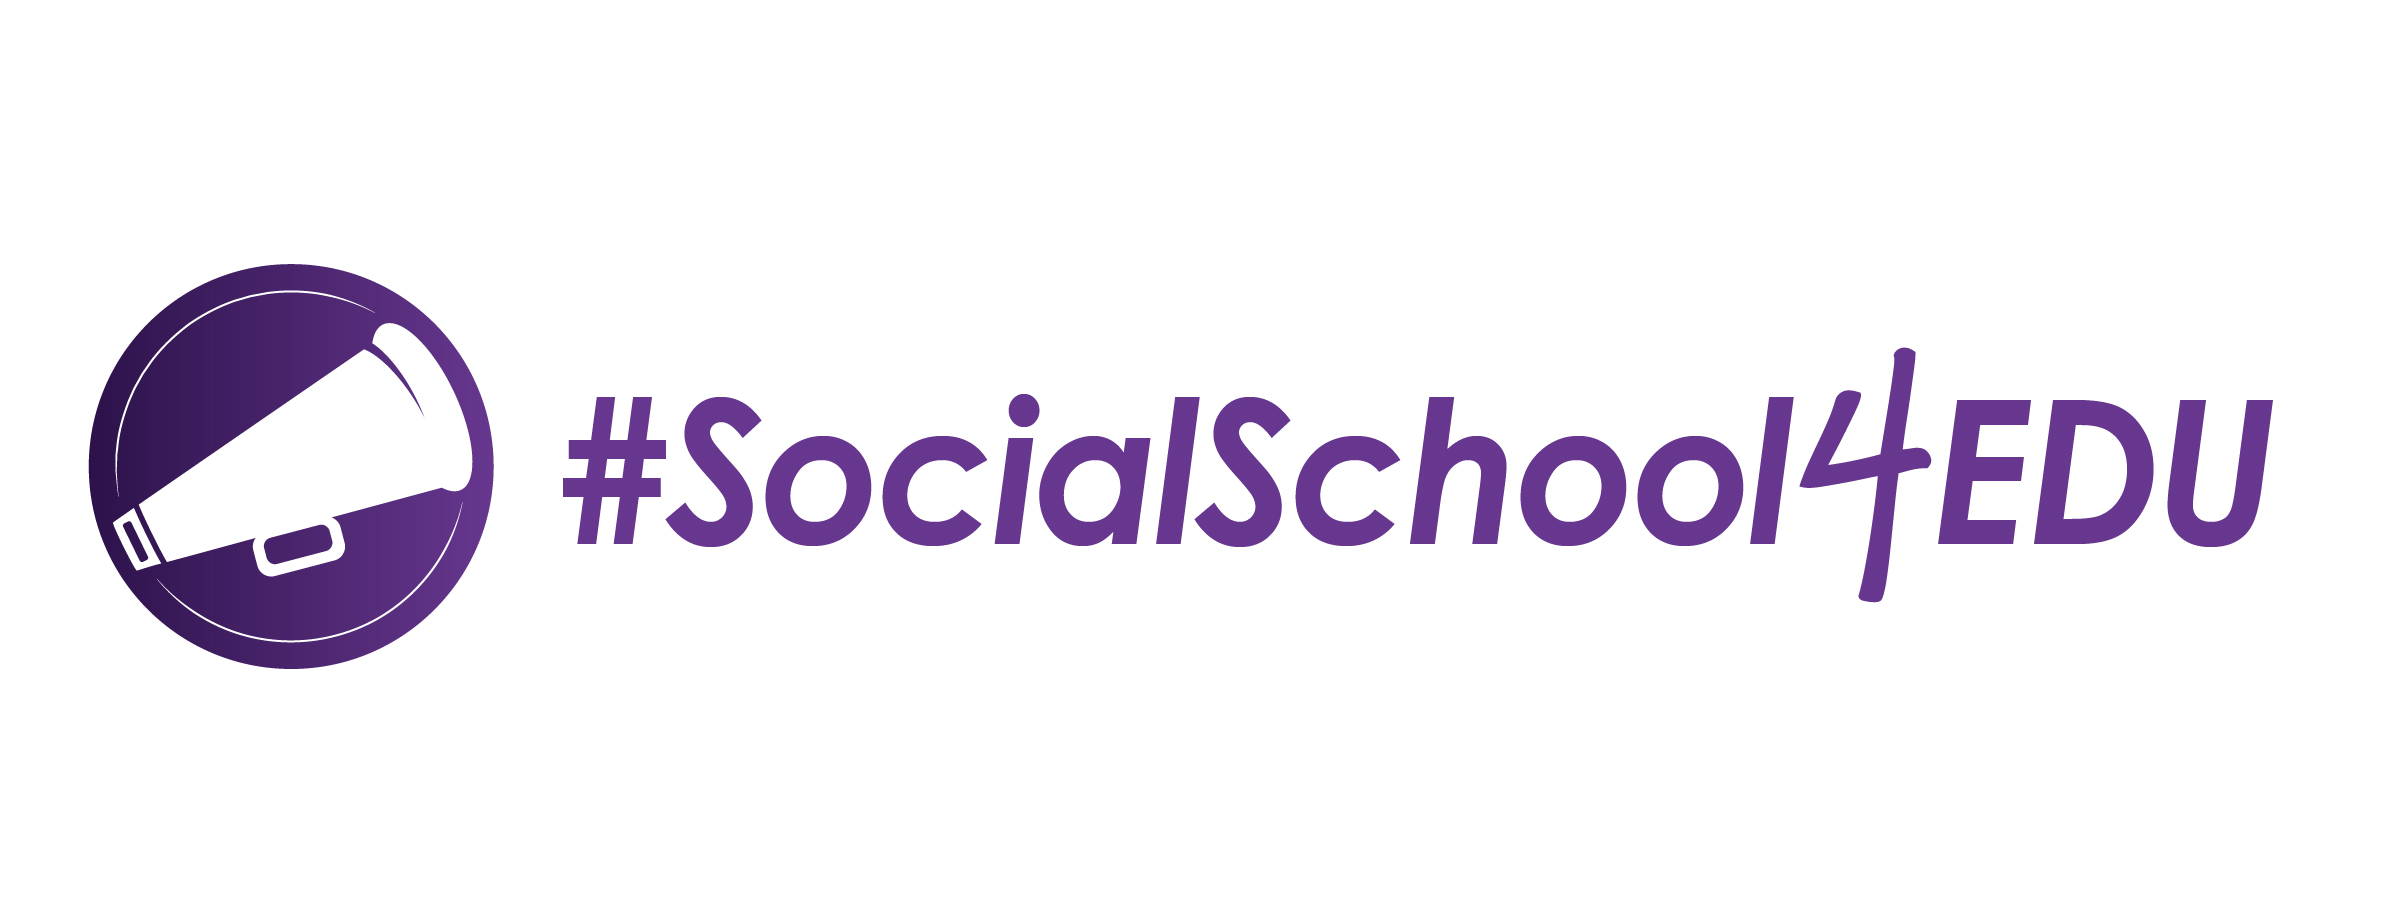 schoolsocial4edu logo